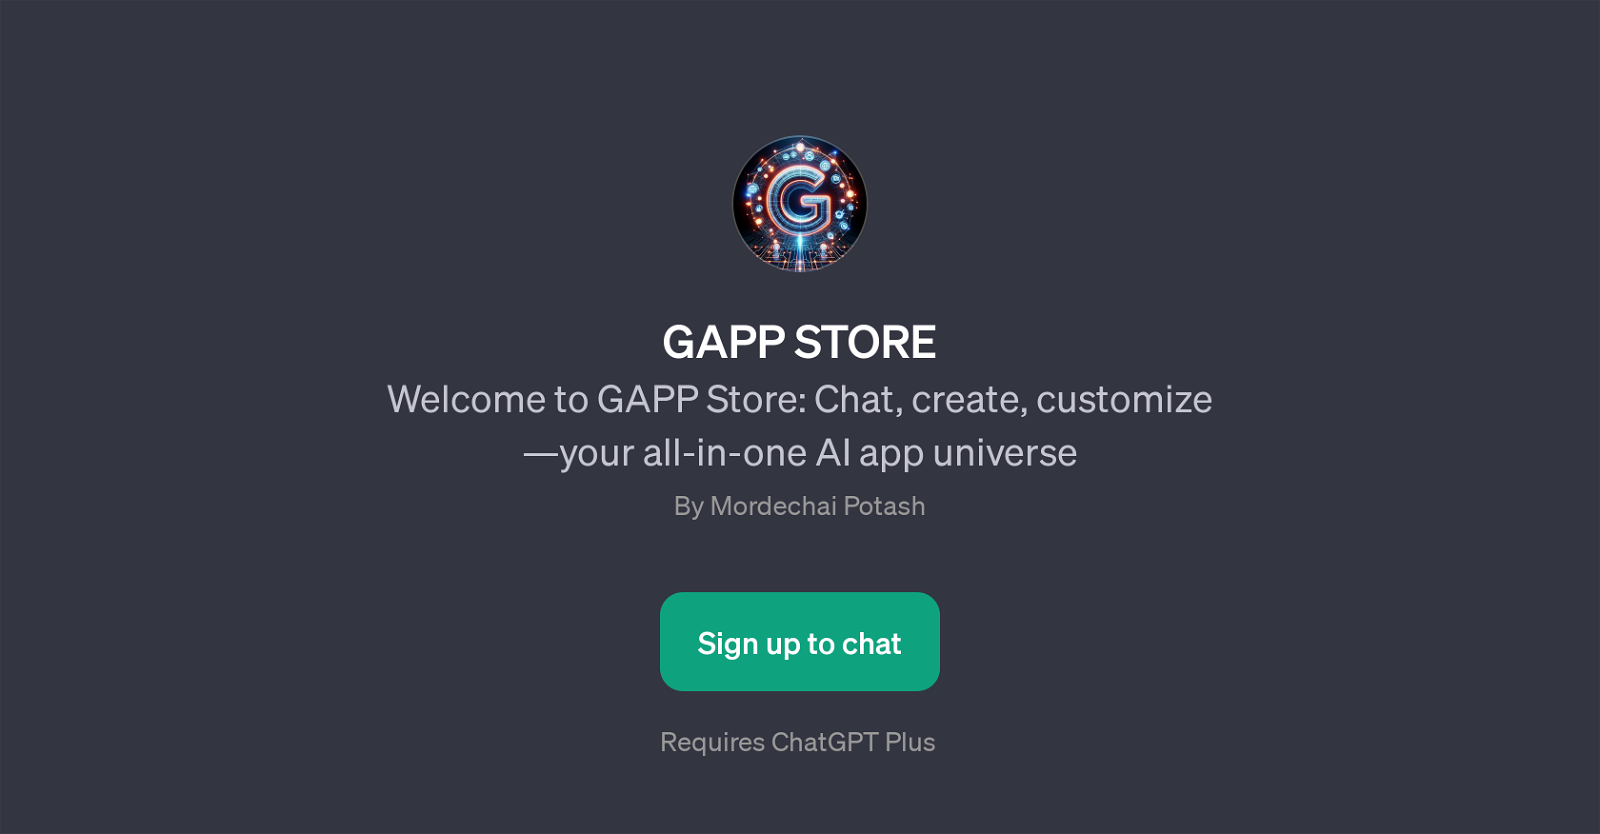 GAPP Store website